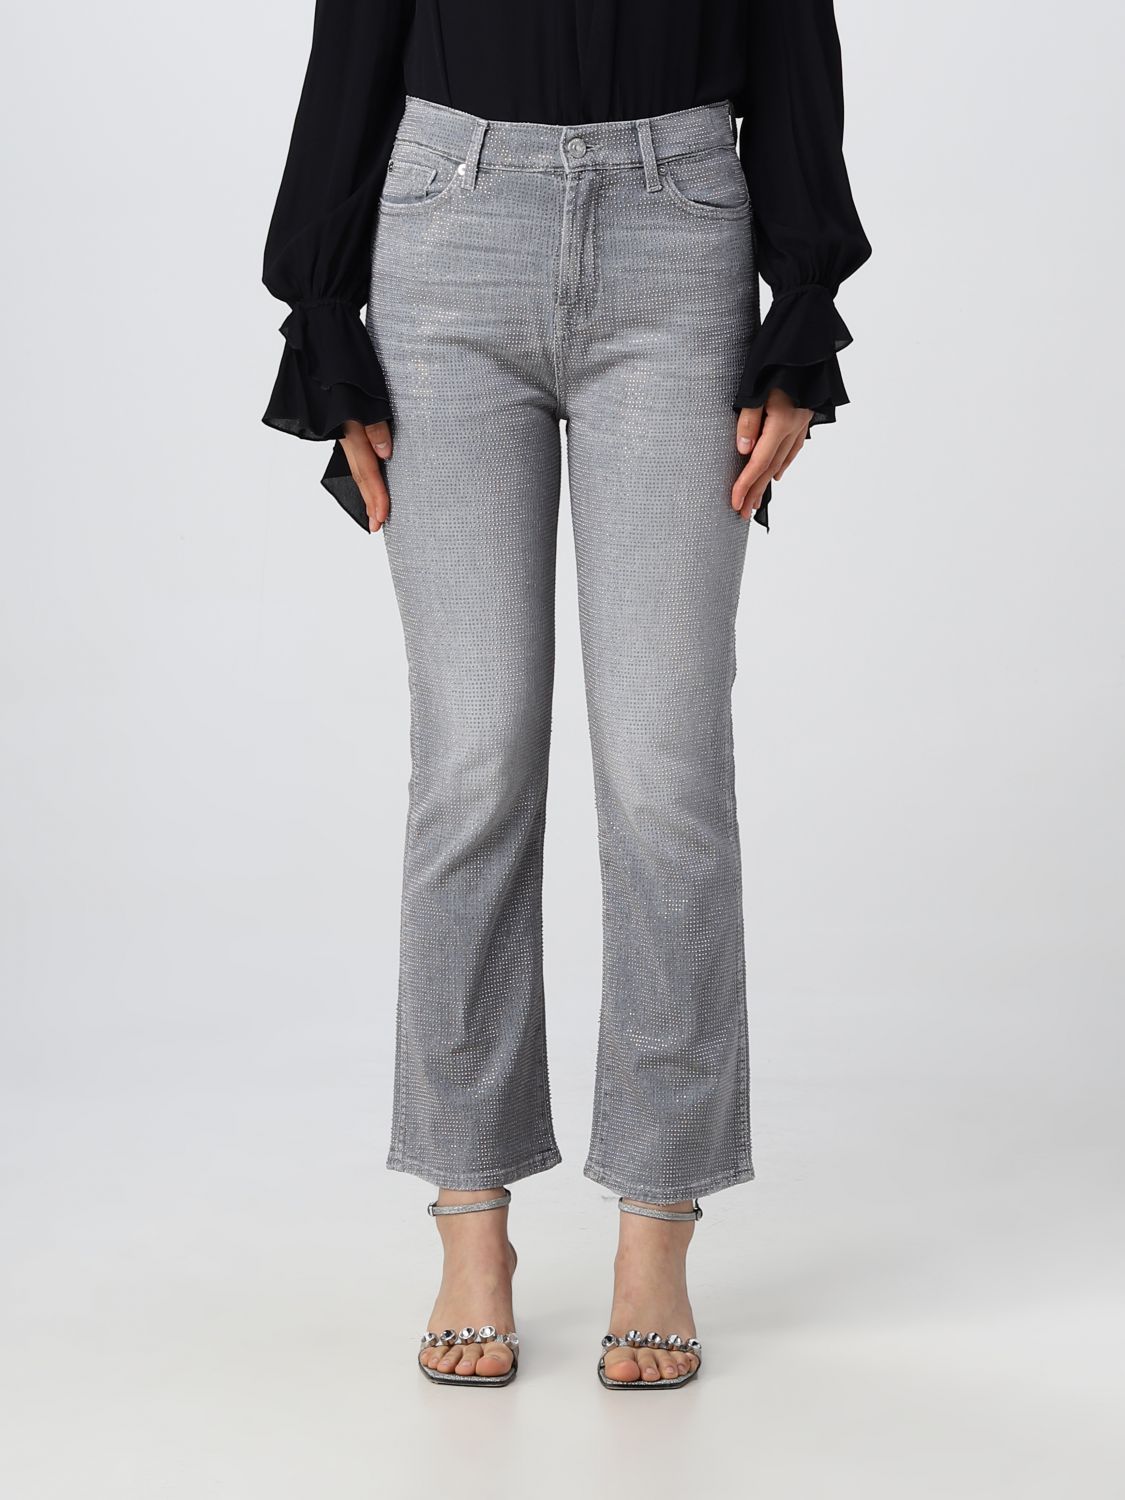 steekpenningen Overname gewicht jeans for woman - Grey | 7 For All Mankind jeans JSHSR88SGA online on  GIGLIO.COM